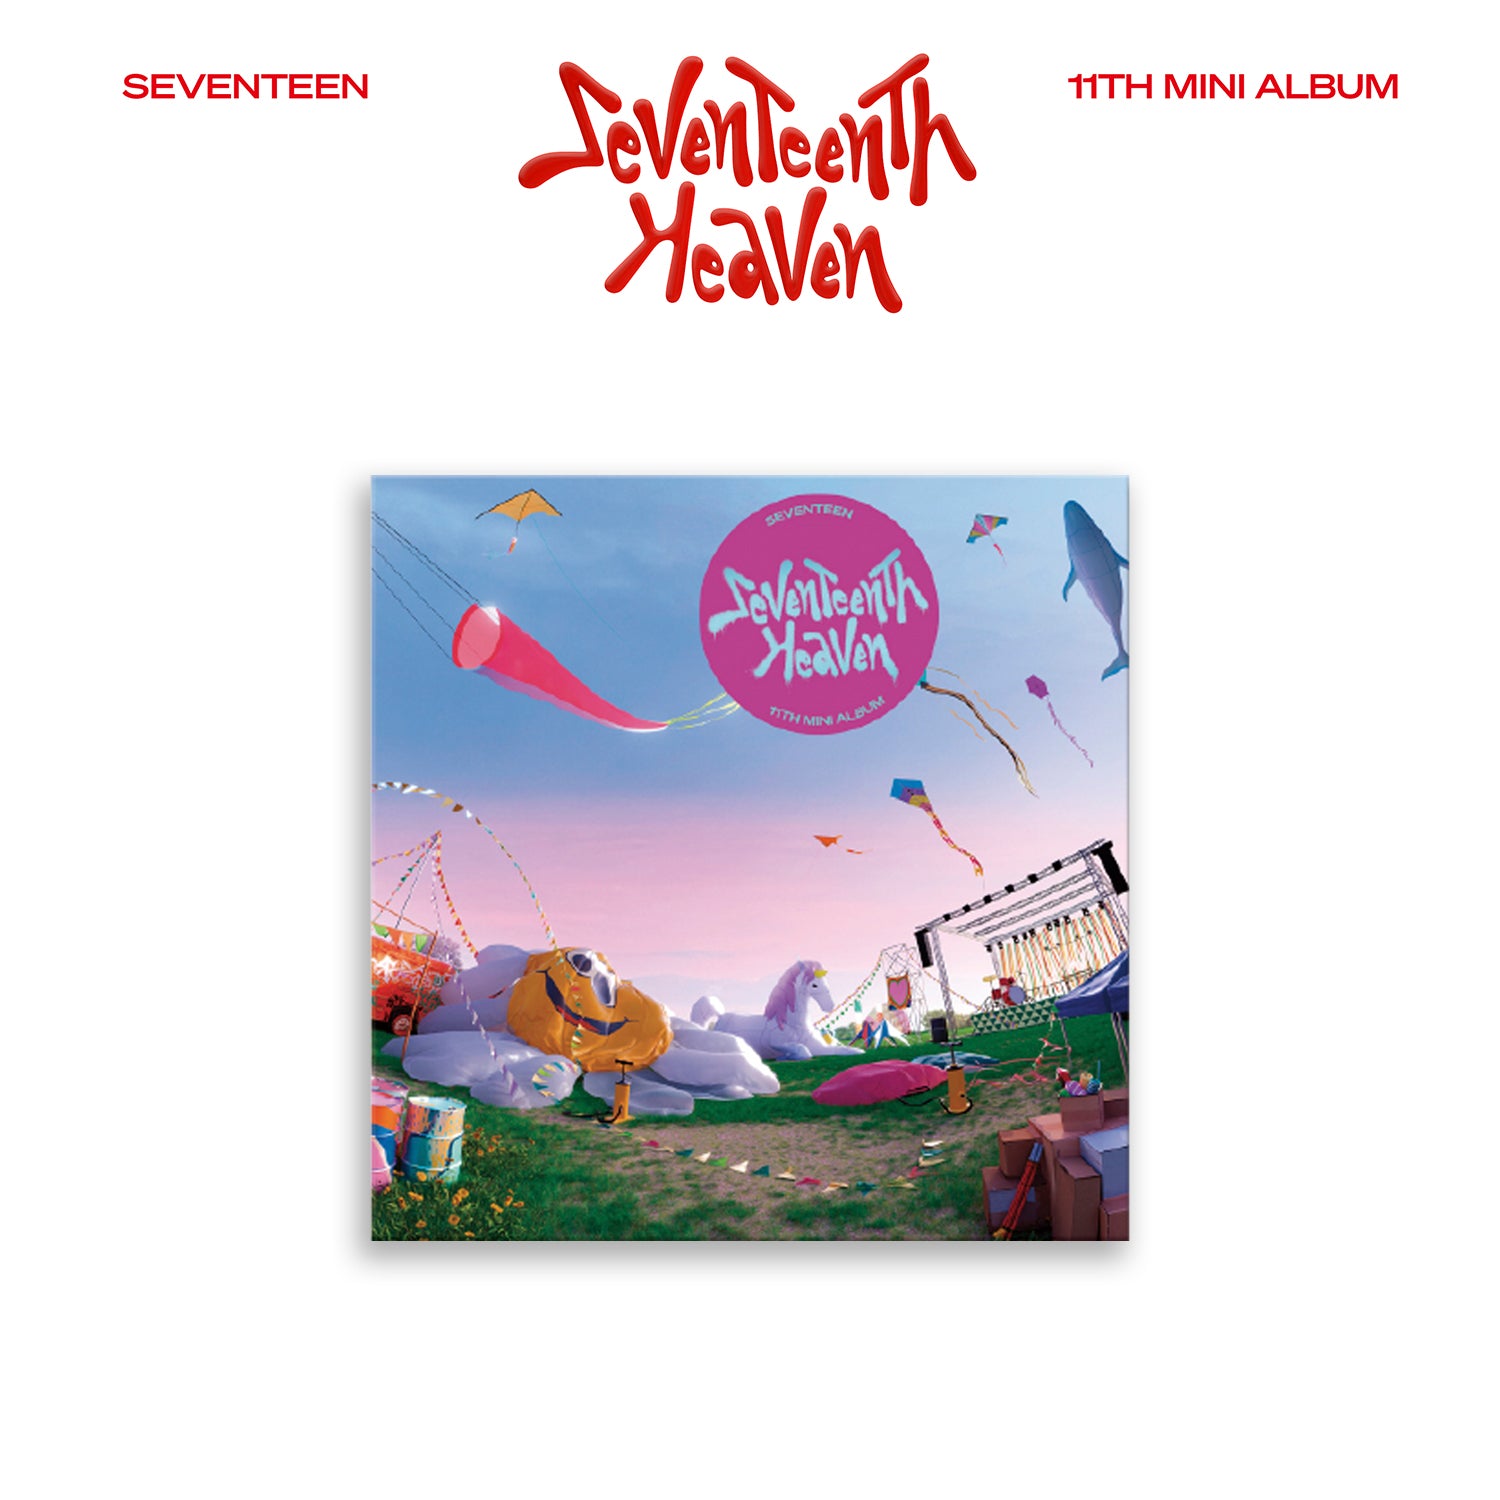 SEVENTEEN 11TH MINI ALBUM - SEVENTEENTH HEAVEN